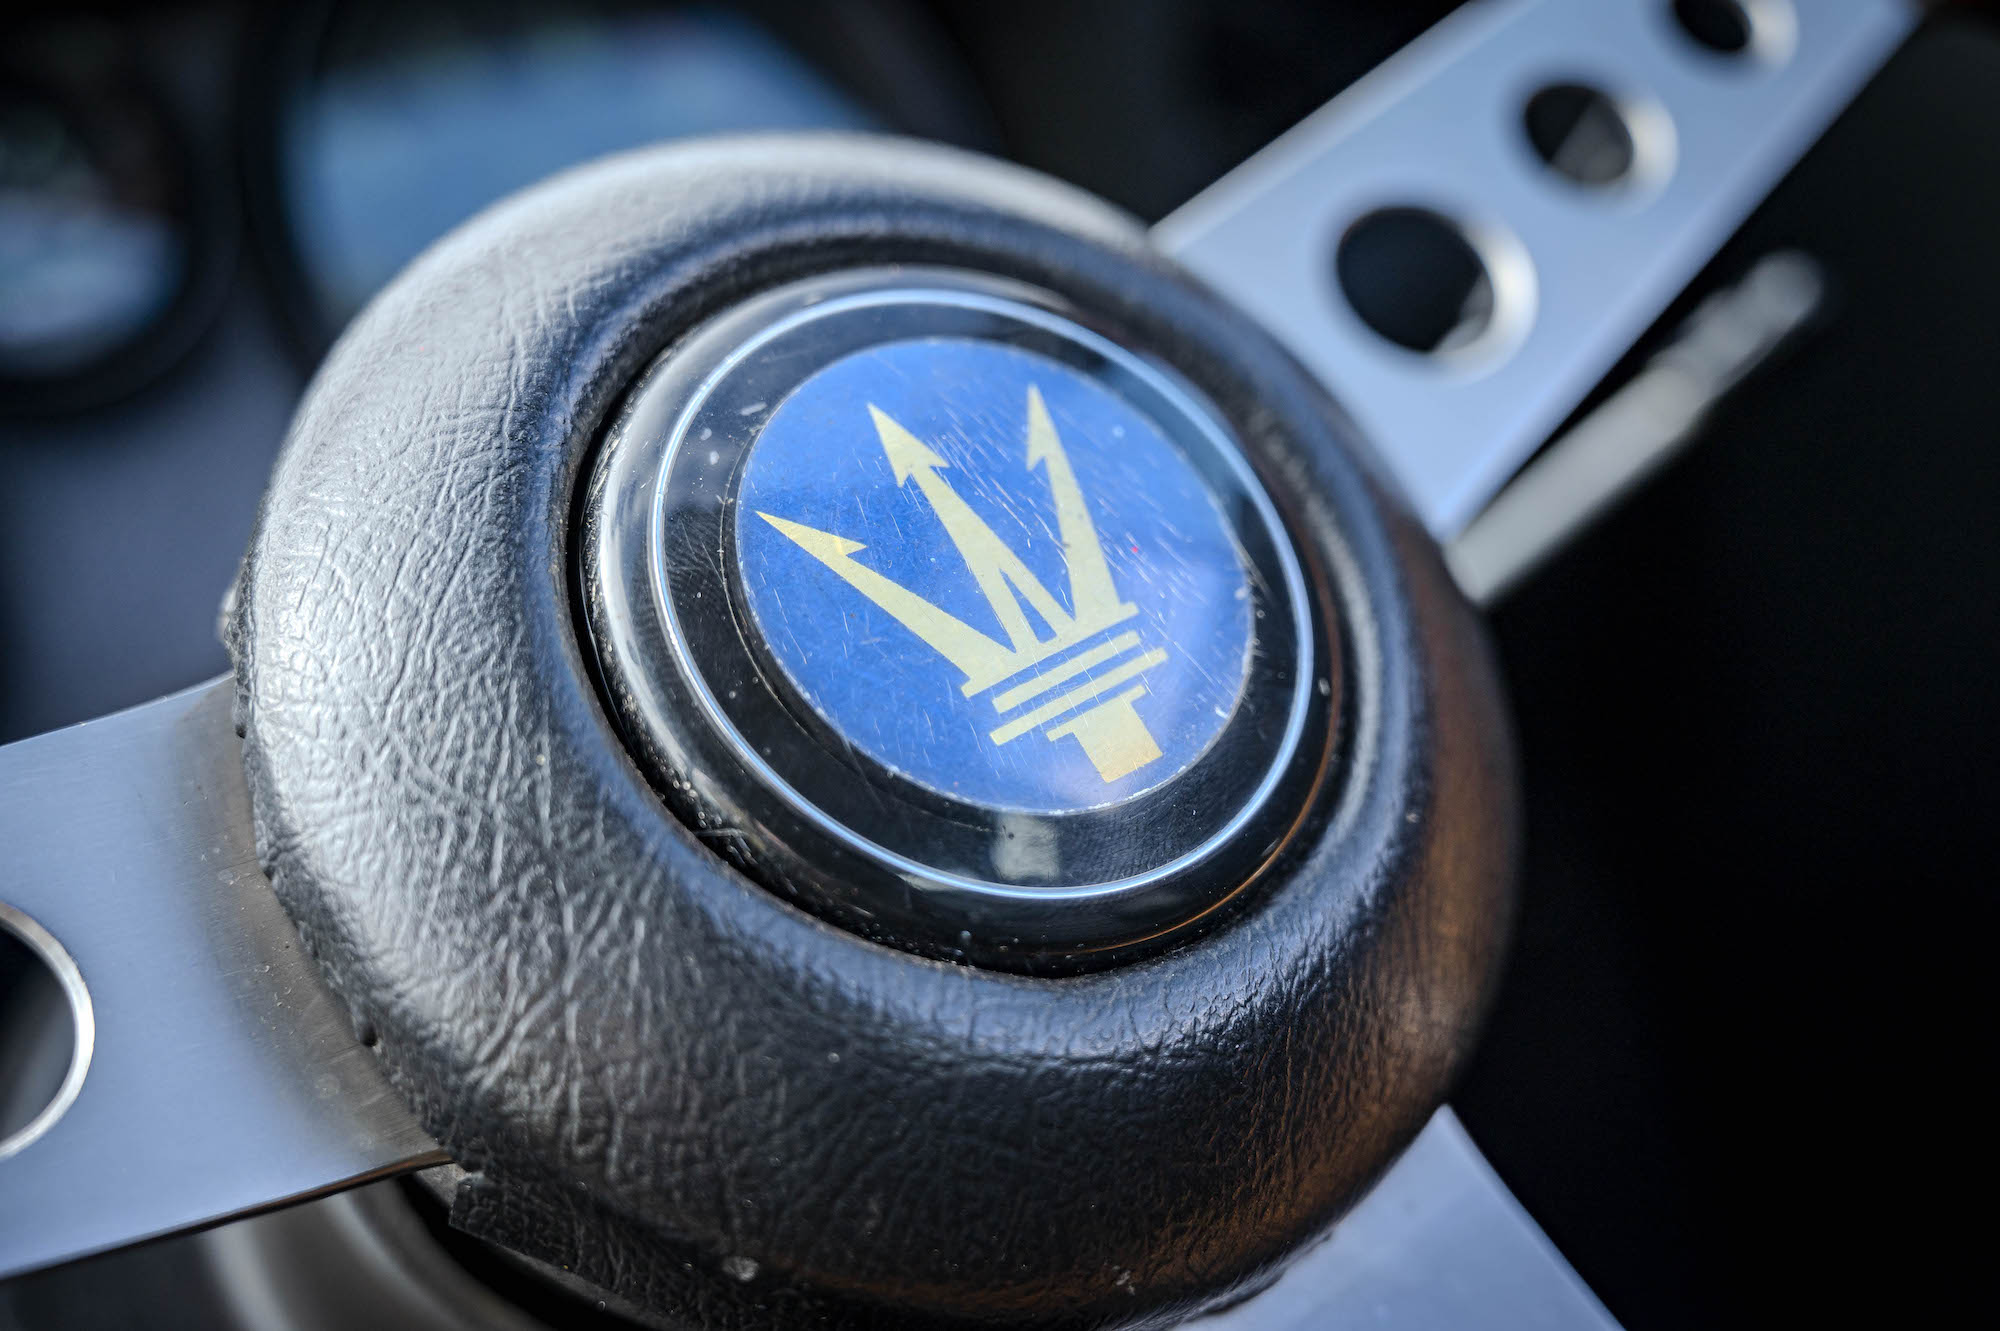 Maserati Indy steering wheel boss